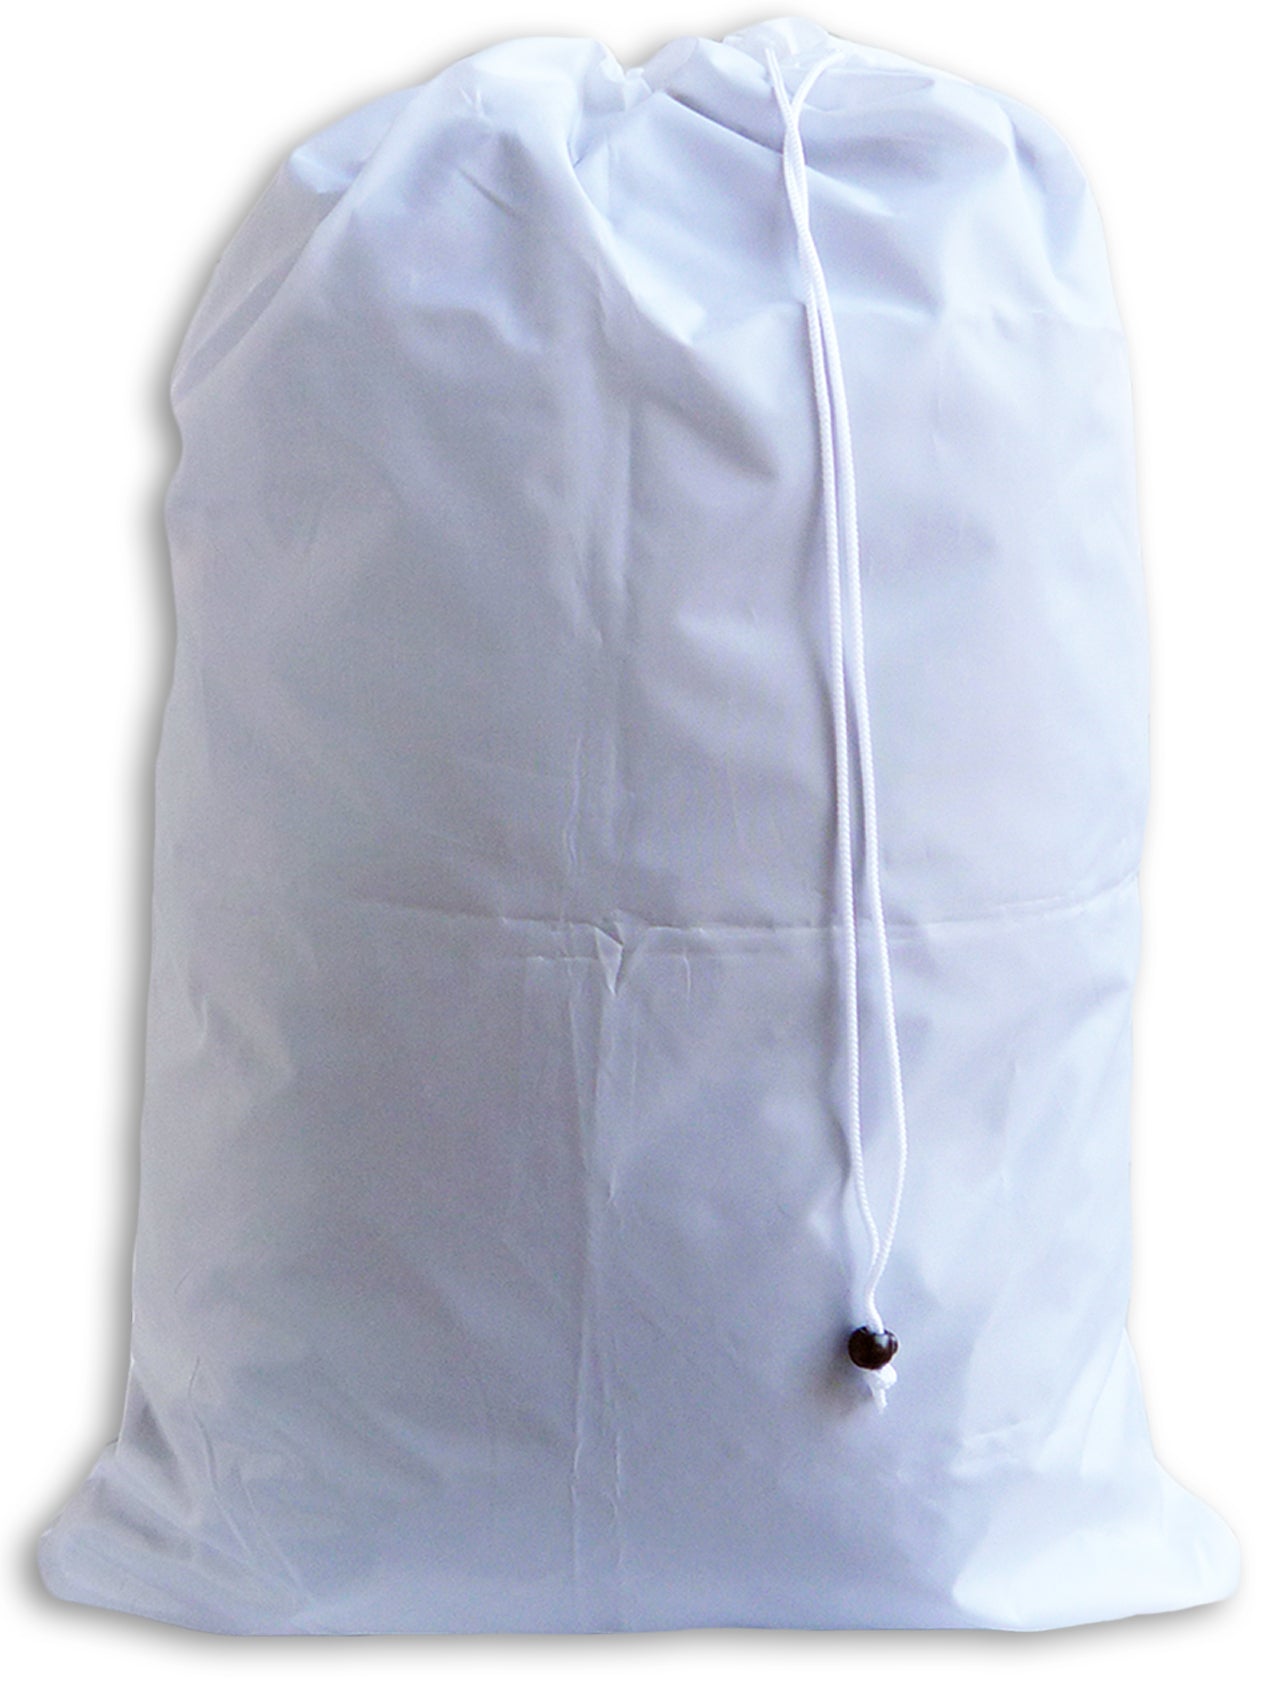 Medium Laundry Bag, White